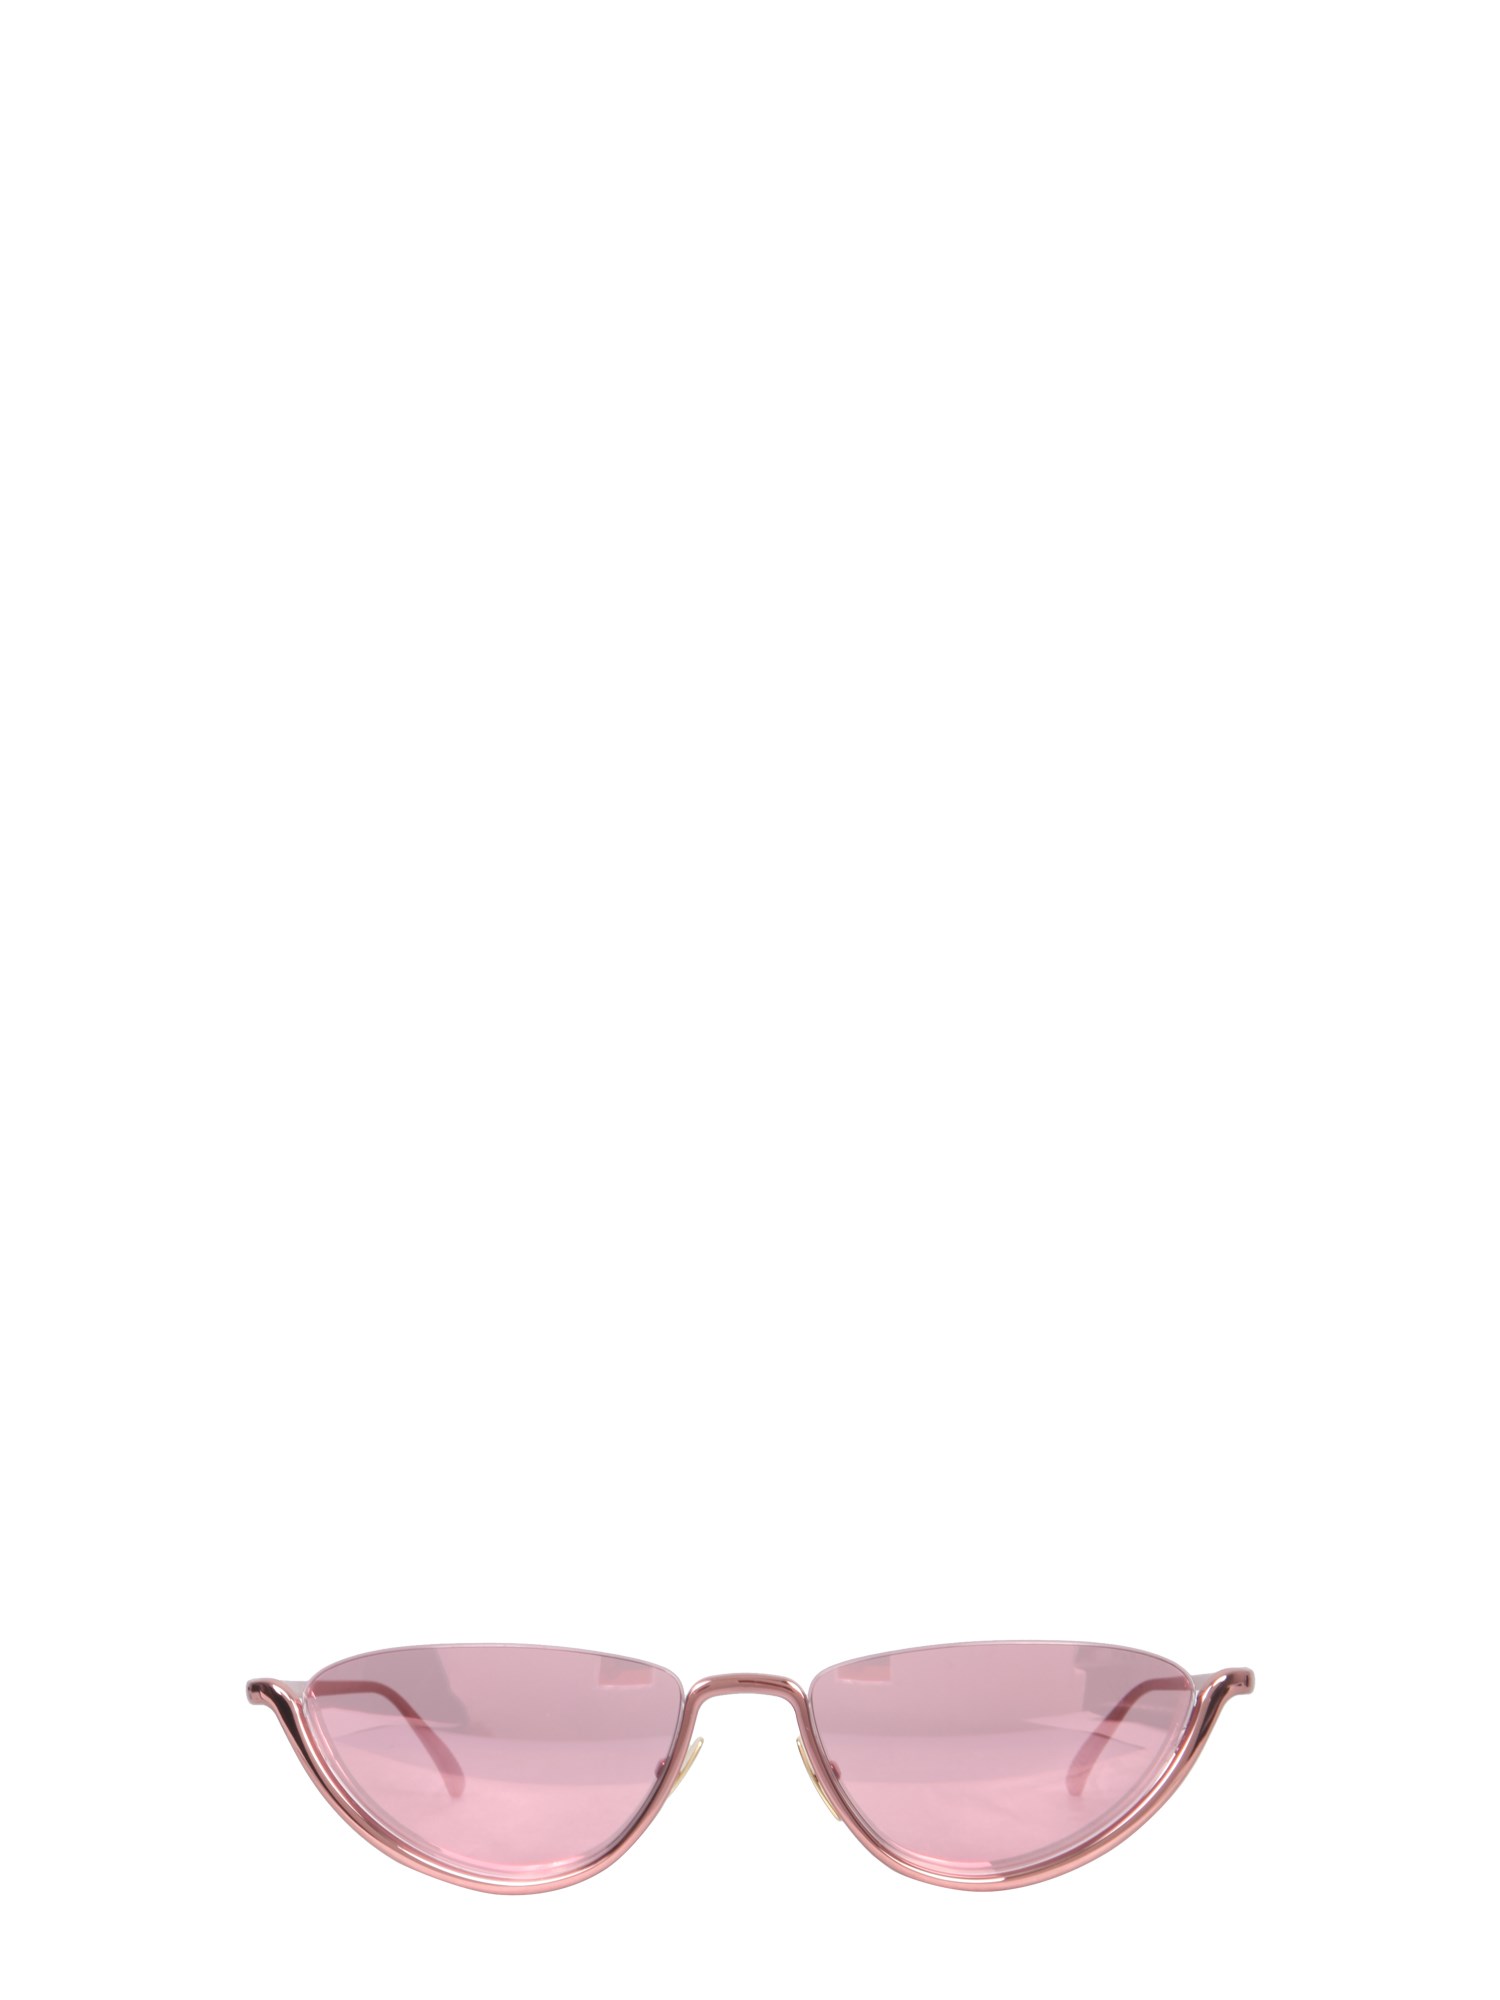 bottega veneta sunglasses with metal half-frame